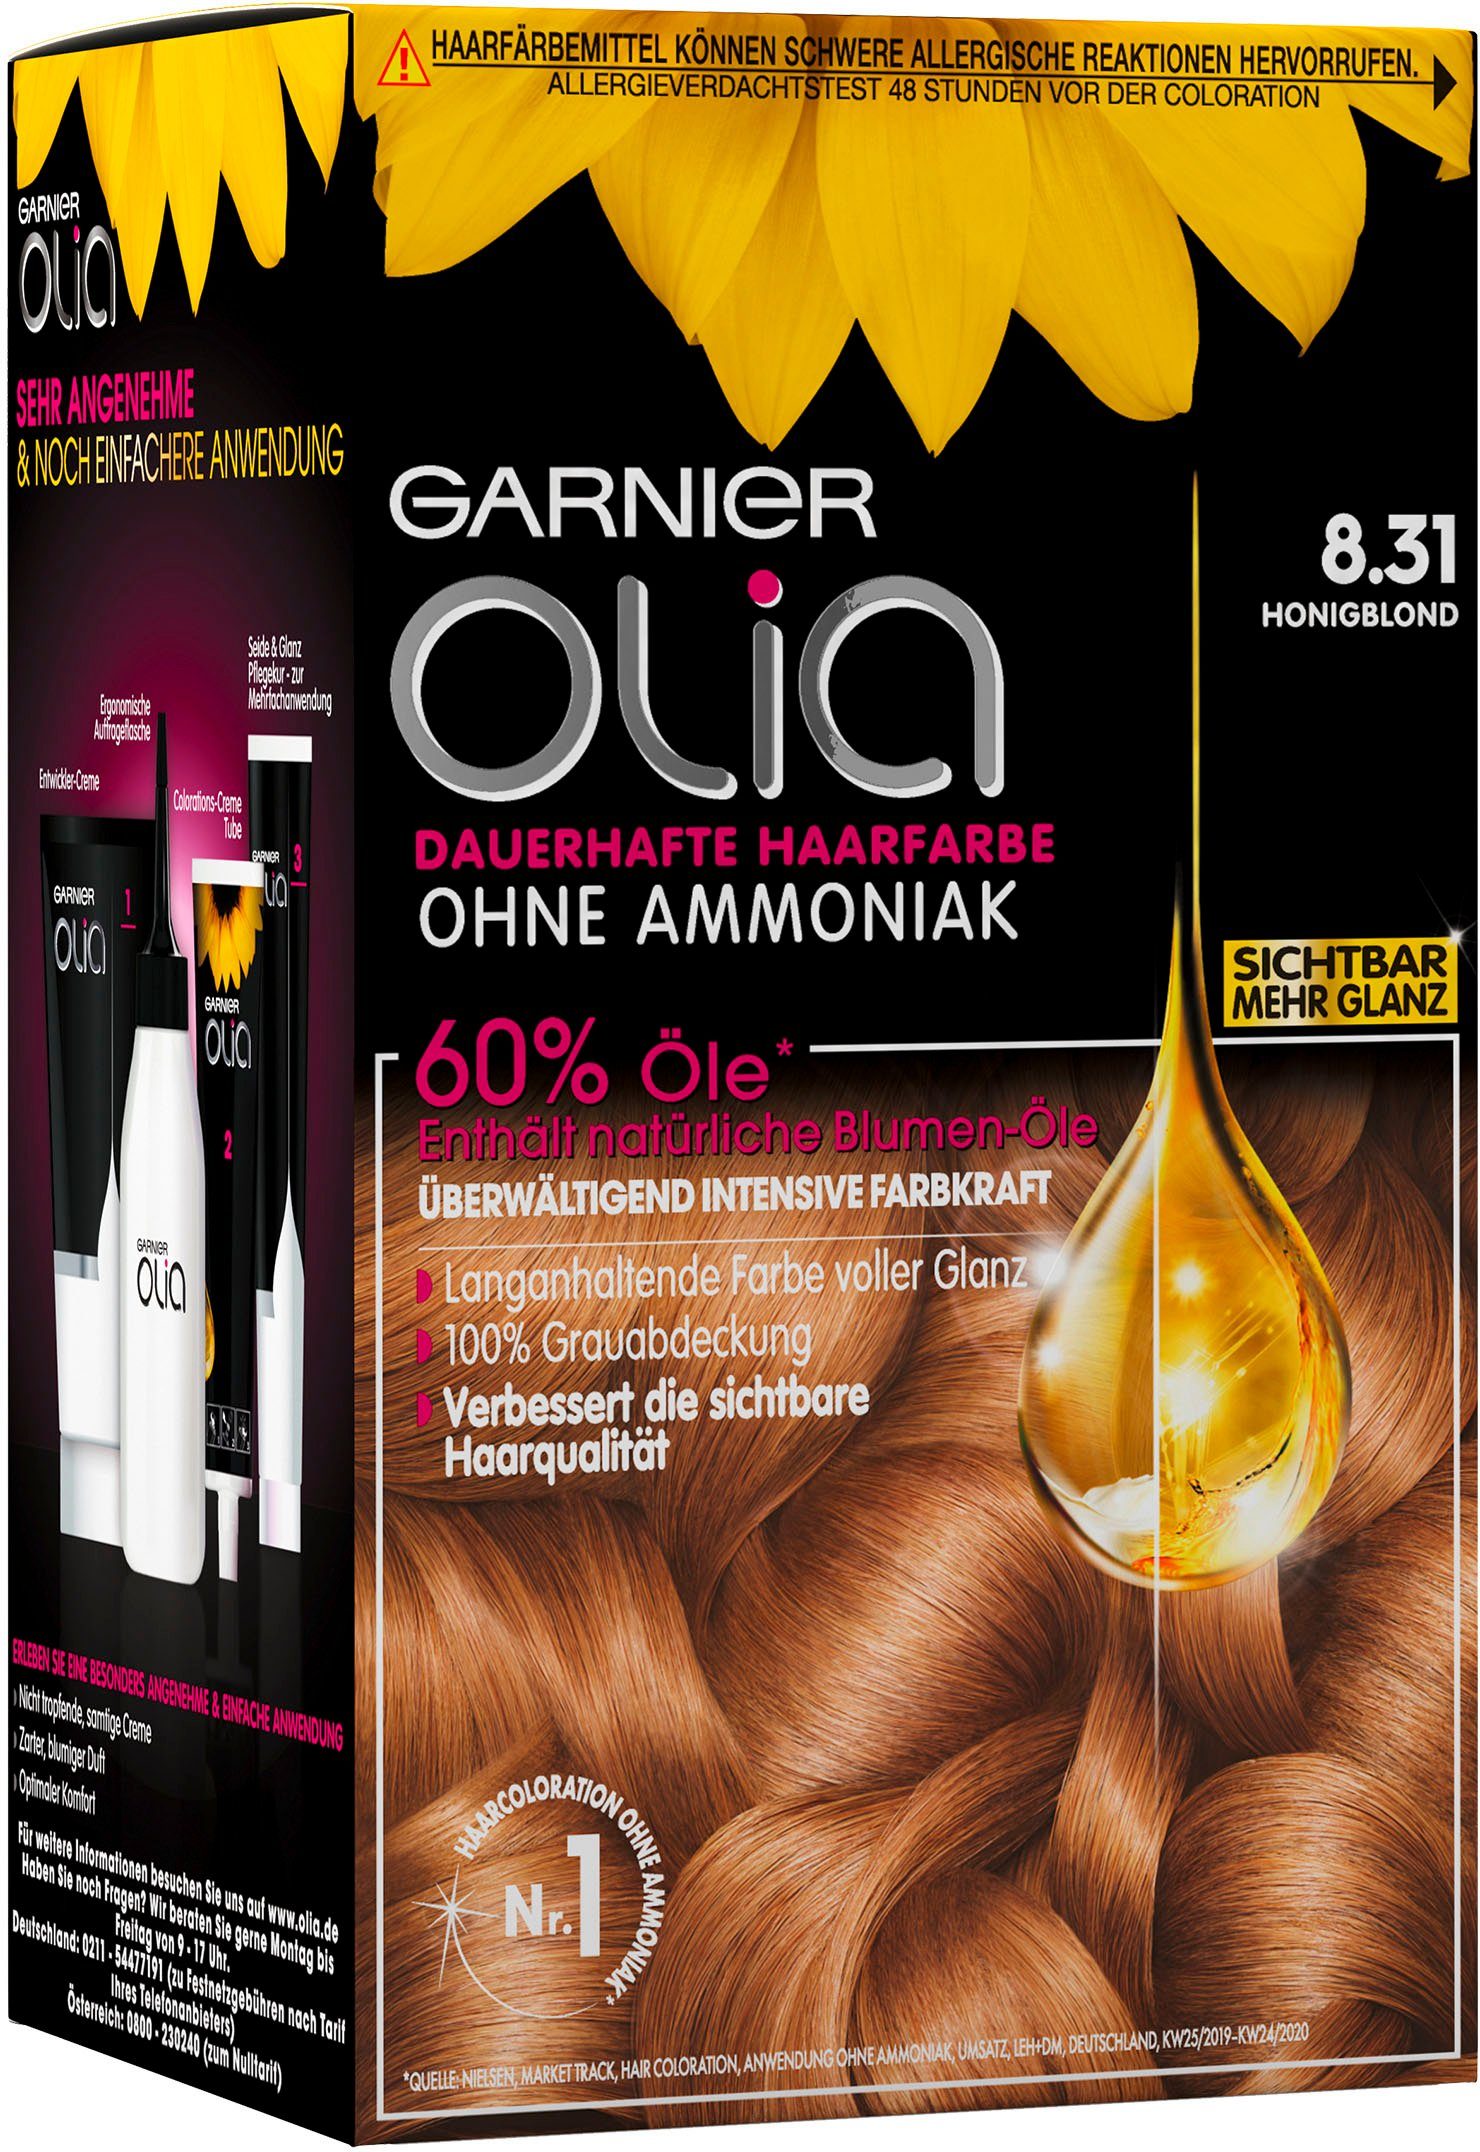 Coloration dauerhafte Olia Honigblond Haarfarbe GARNIER 8.31